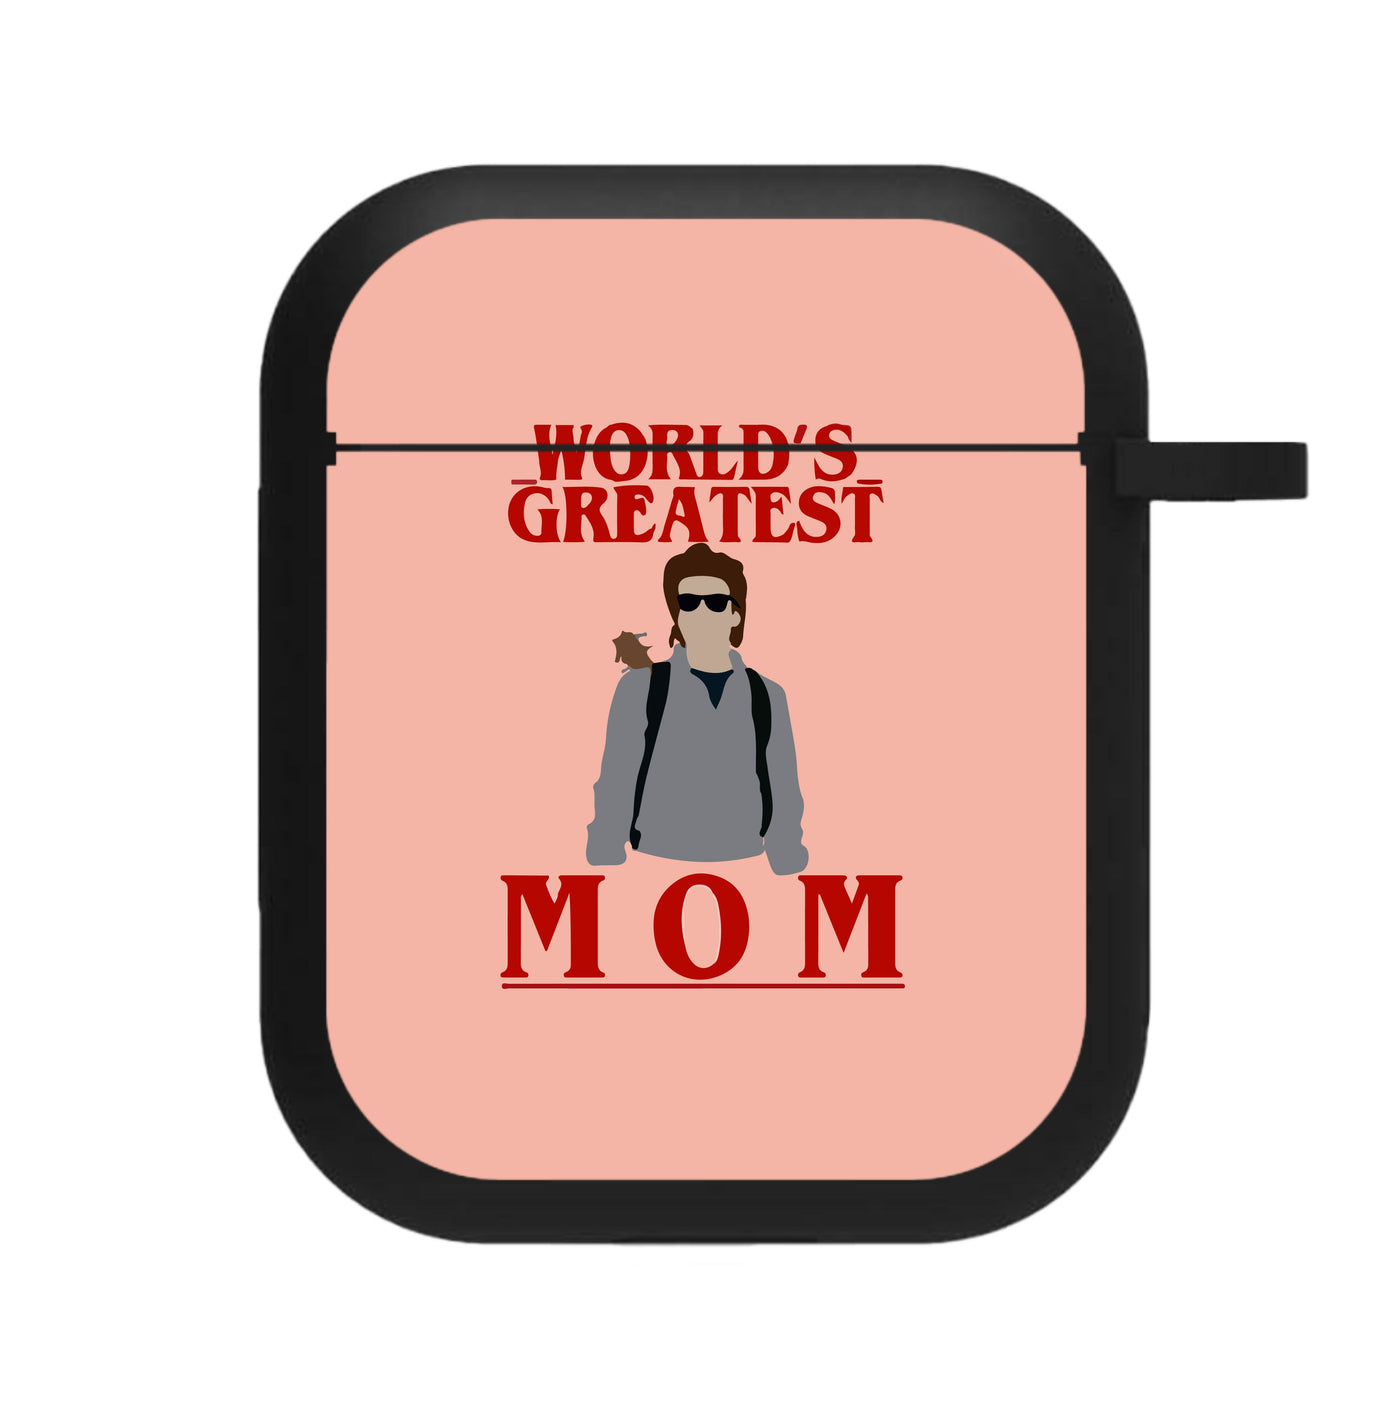 World's Greatest Mom - Stranger Things AirPods Case